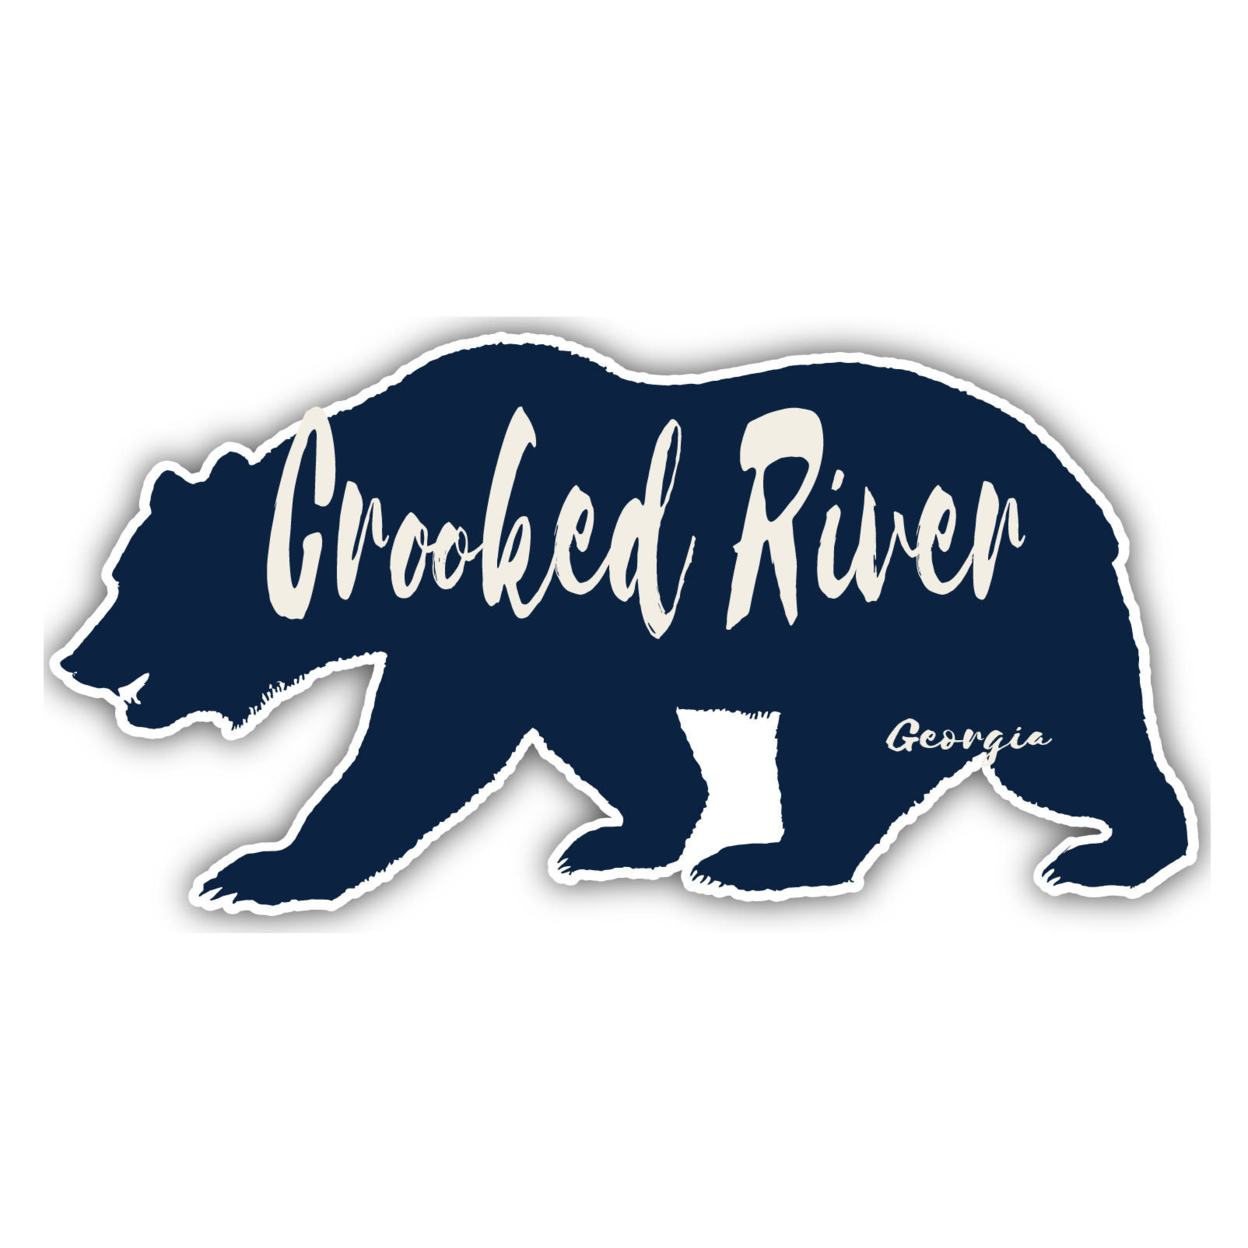 Crooked River Georgia Souvenir Decorative Stickers (Choose Theme And Size) - Single Unit, 8-Inch, Bear